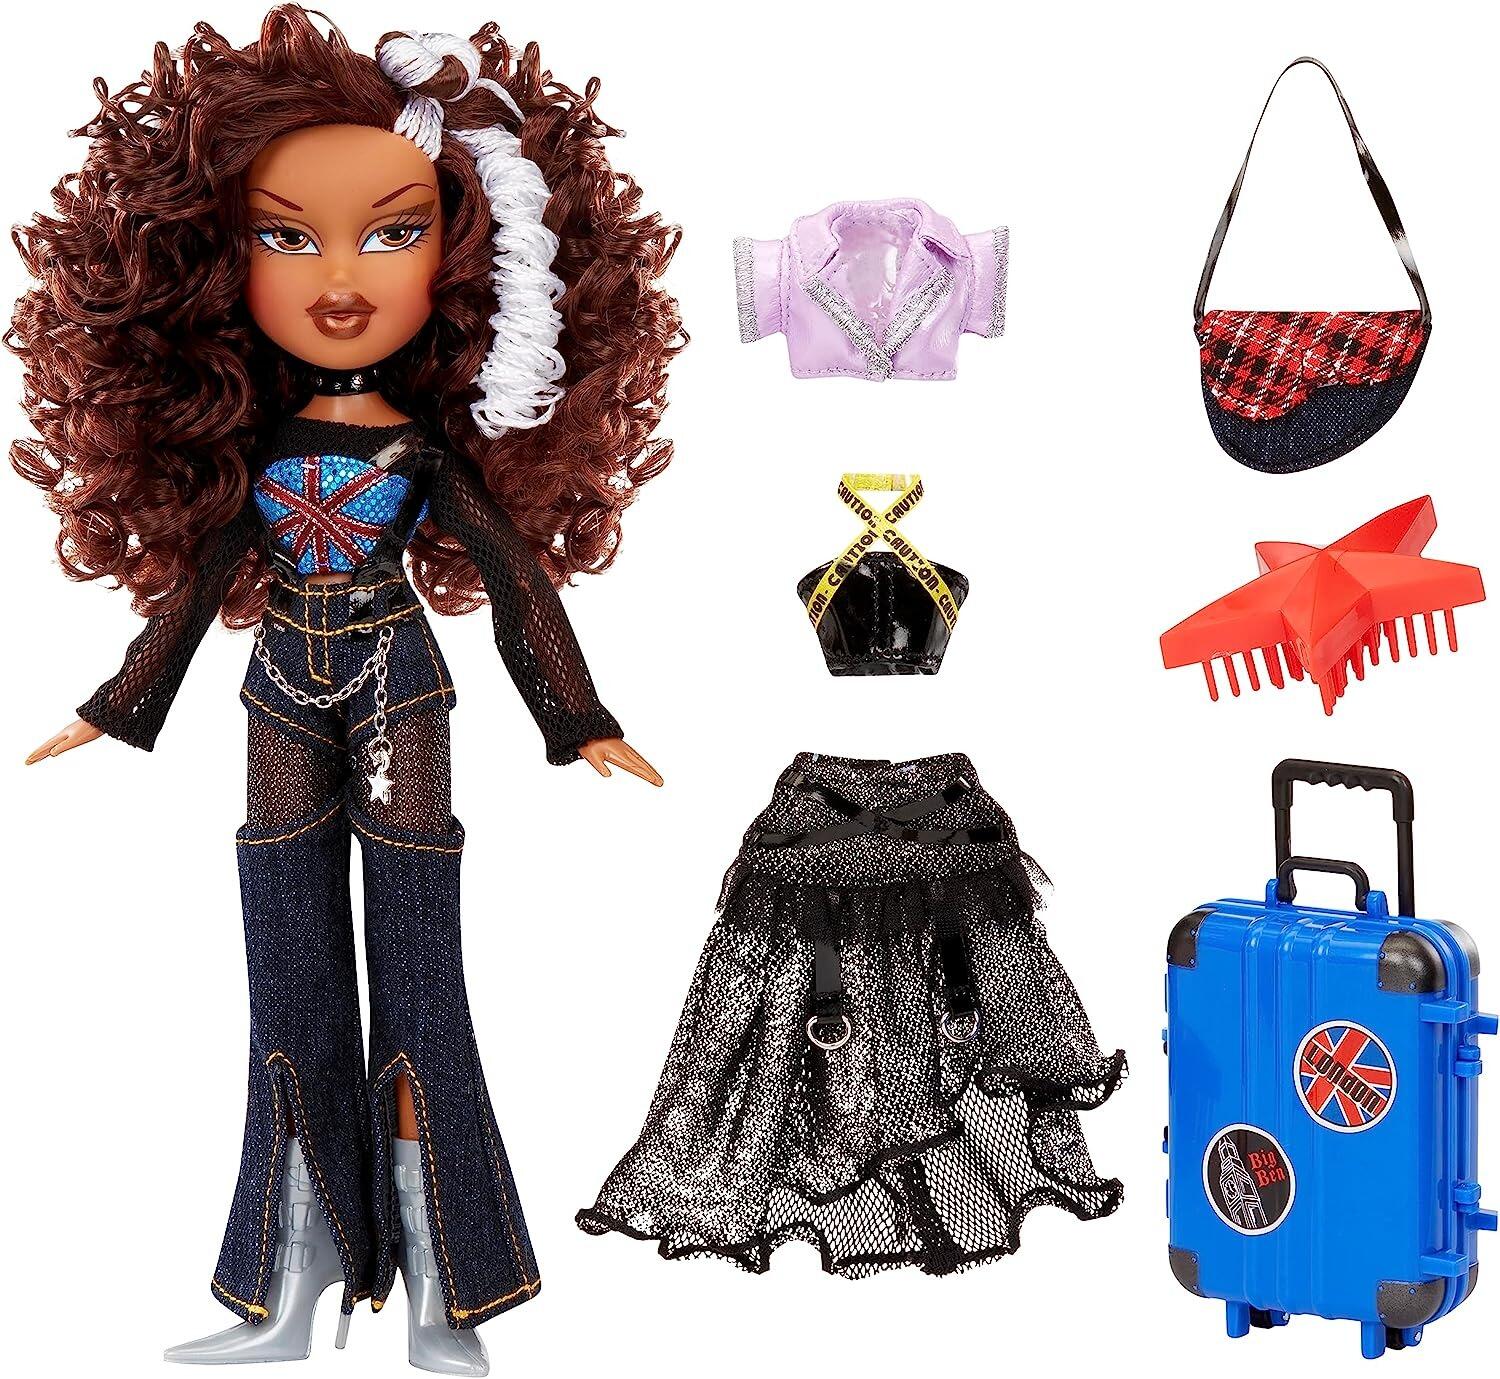 Bratz Pretty ‘N’ Punk Sasha Fashion Doll with 2 Outfits and Suitcase